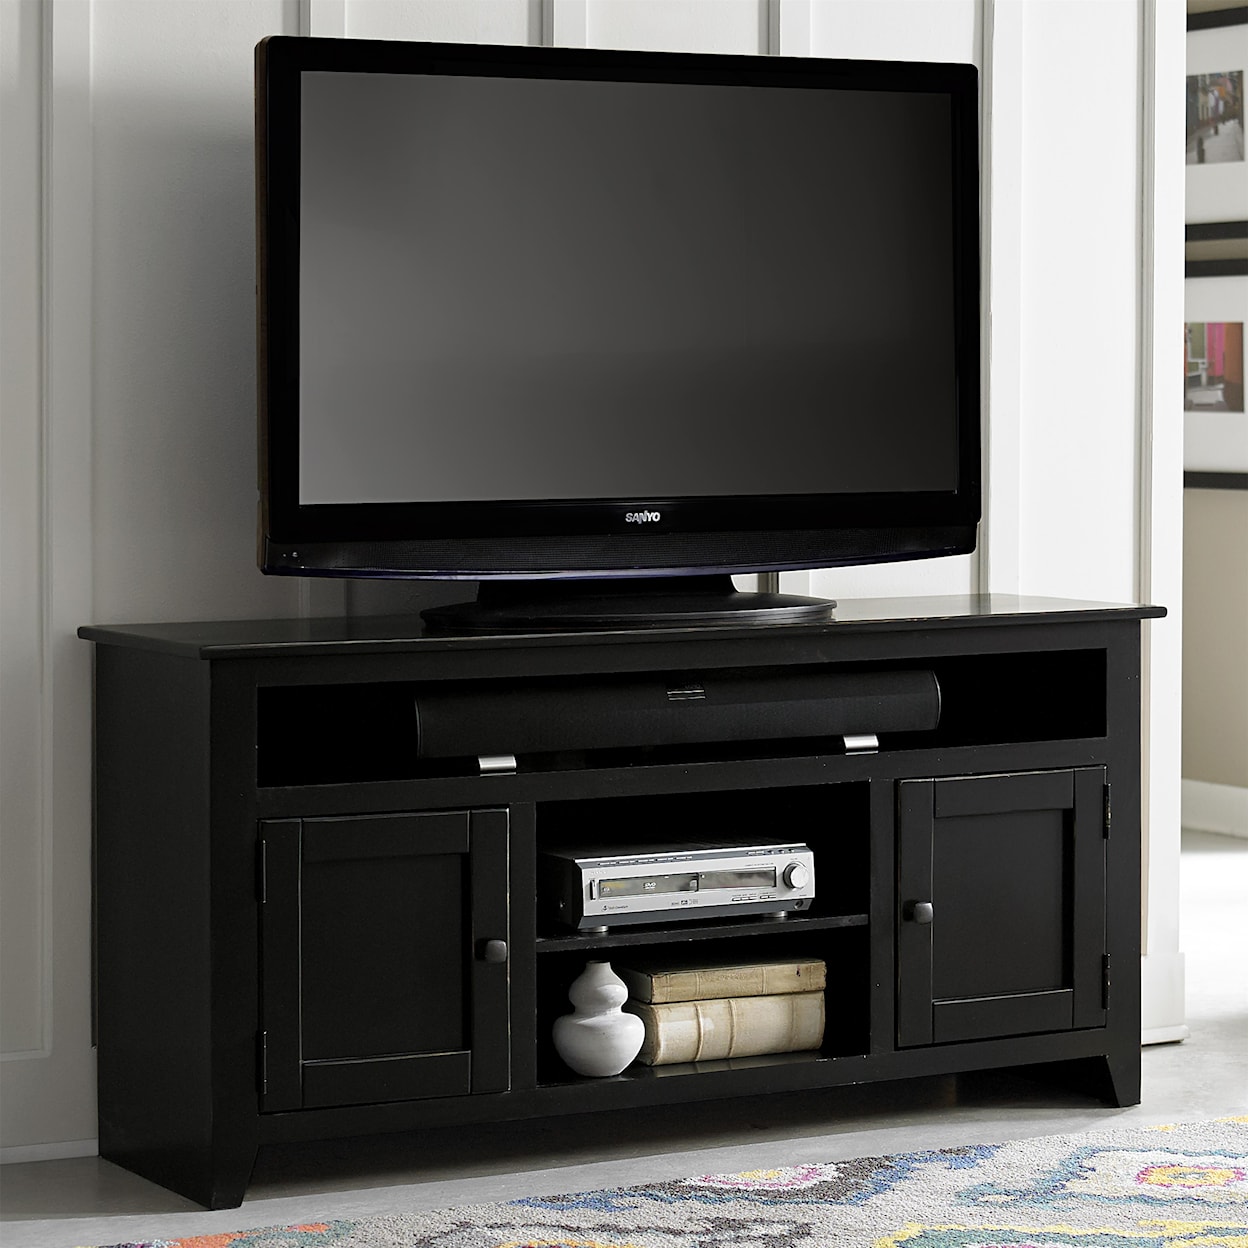 Progressive Furniture Rio Bravo 58" TV Stand